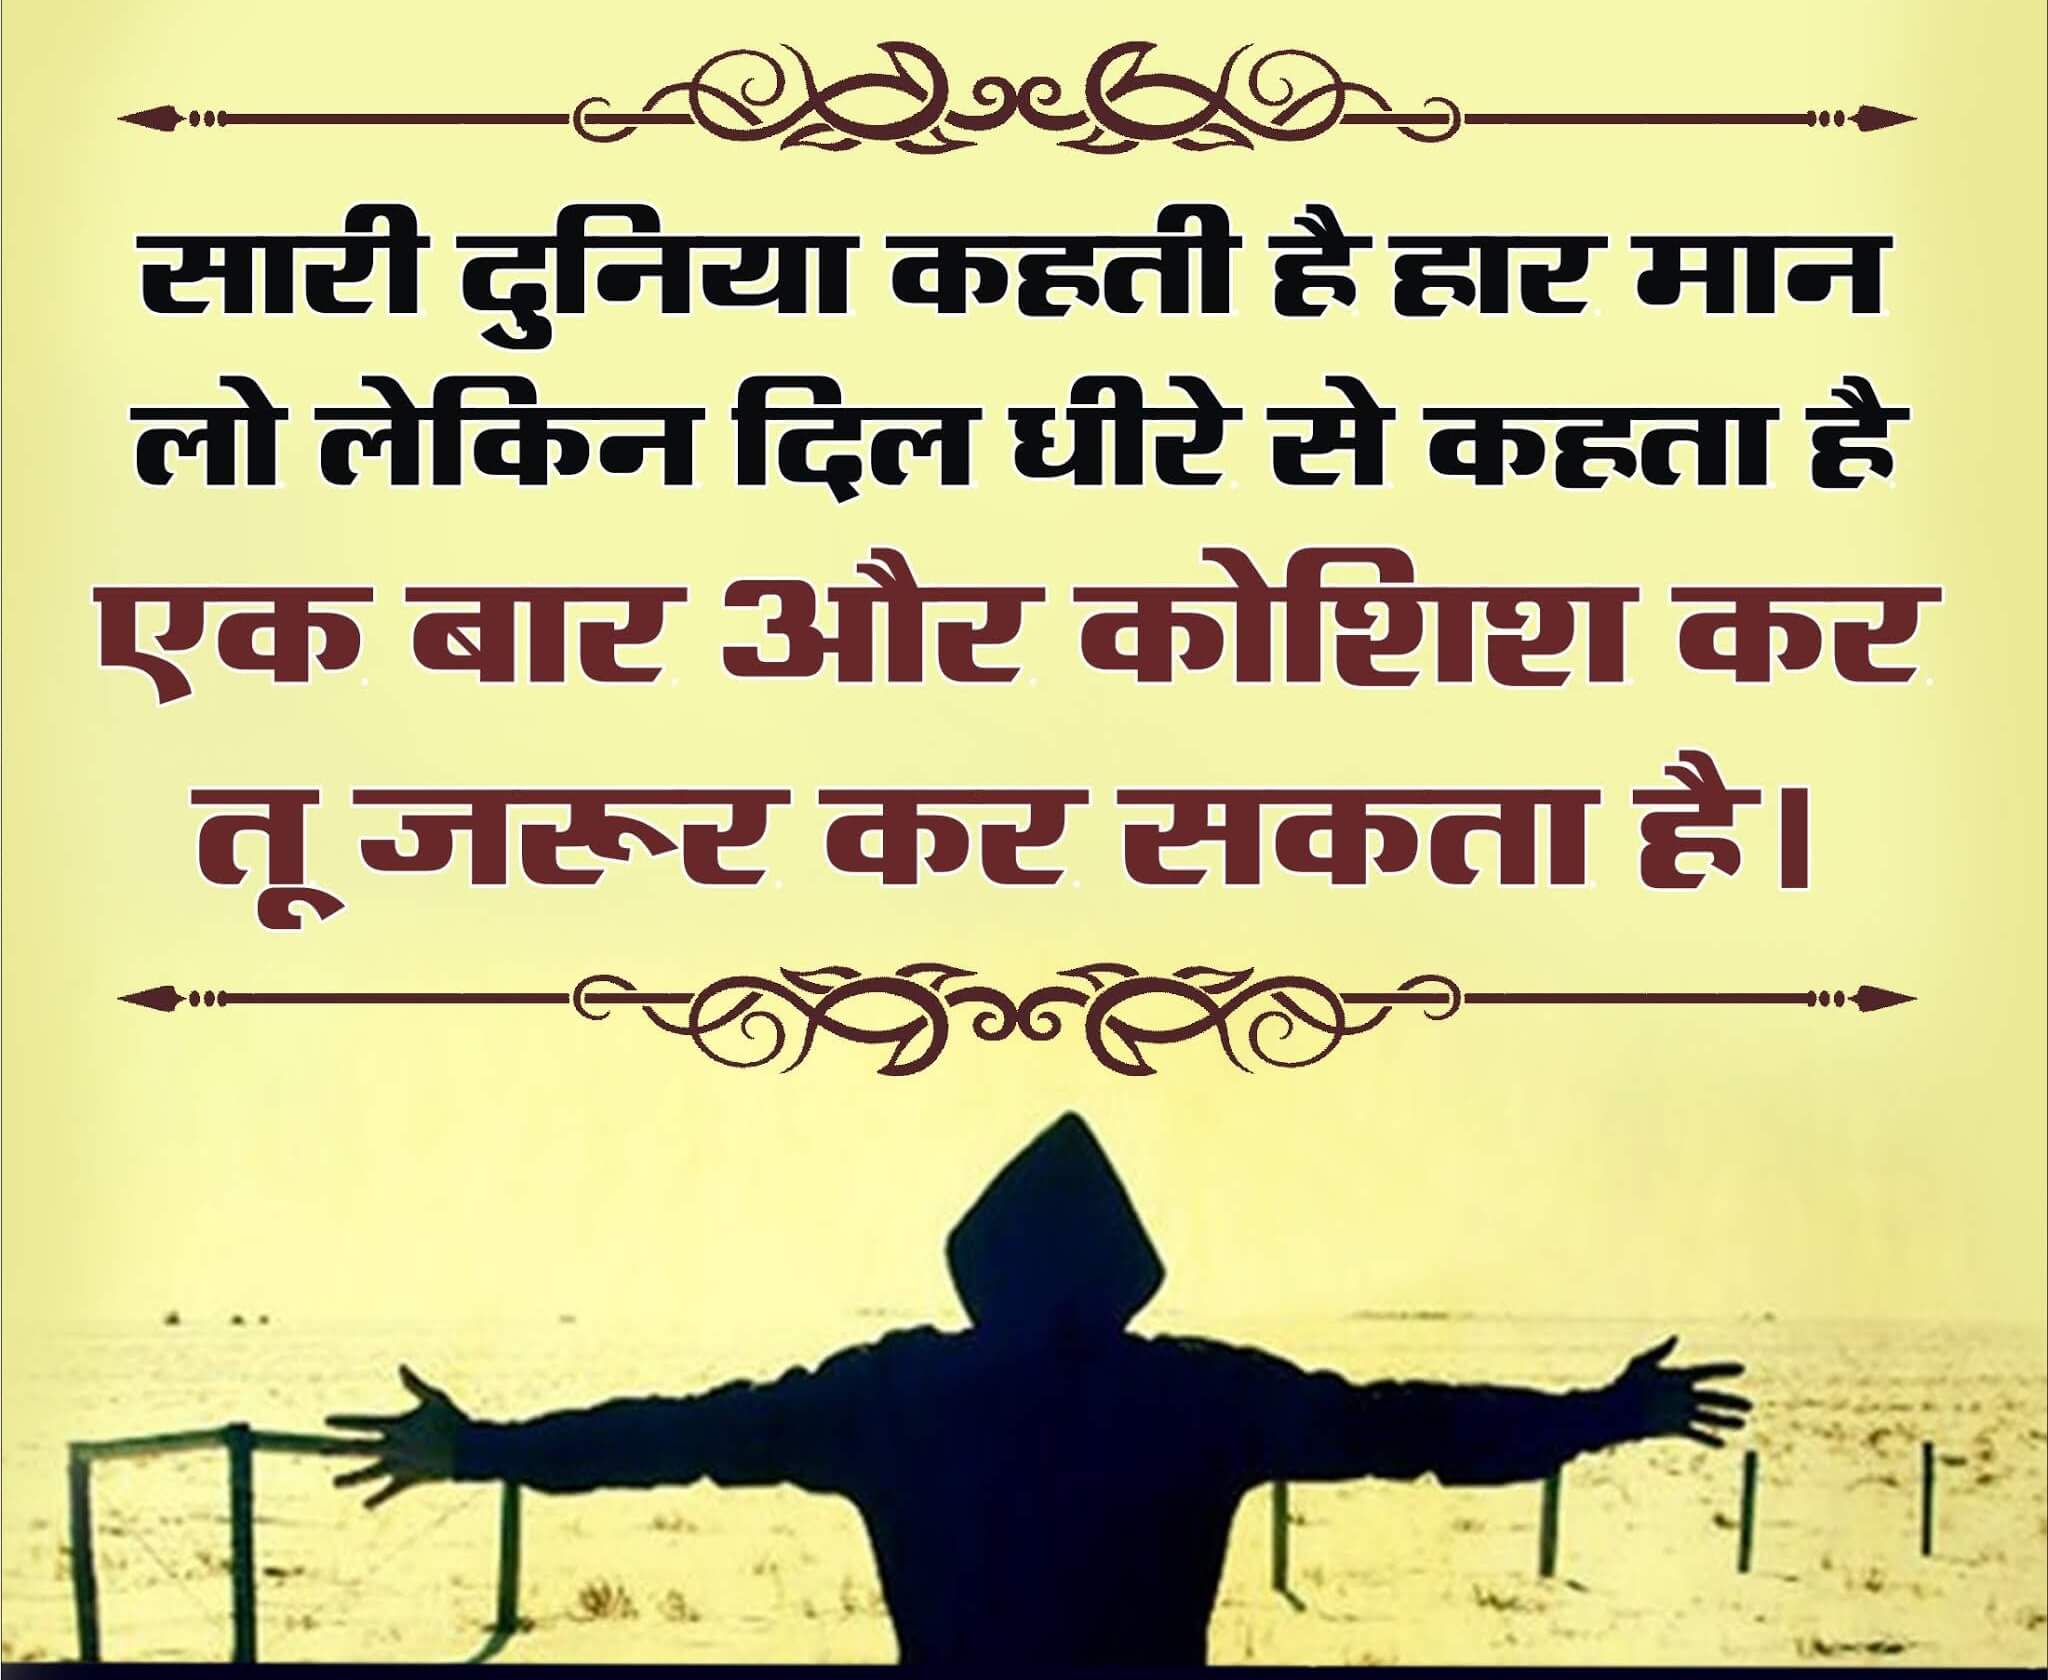 Hindi Motivational Quotes And Thoughts À¤¹ À¤¨ À¤¦ À¤® À¤ À¤µ À¤¶à¤¨à¤² À¤ À¤µ À¤ À¤¸ À¤à¤° À¤µ À¤ À¤°